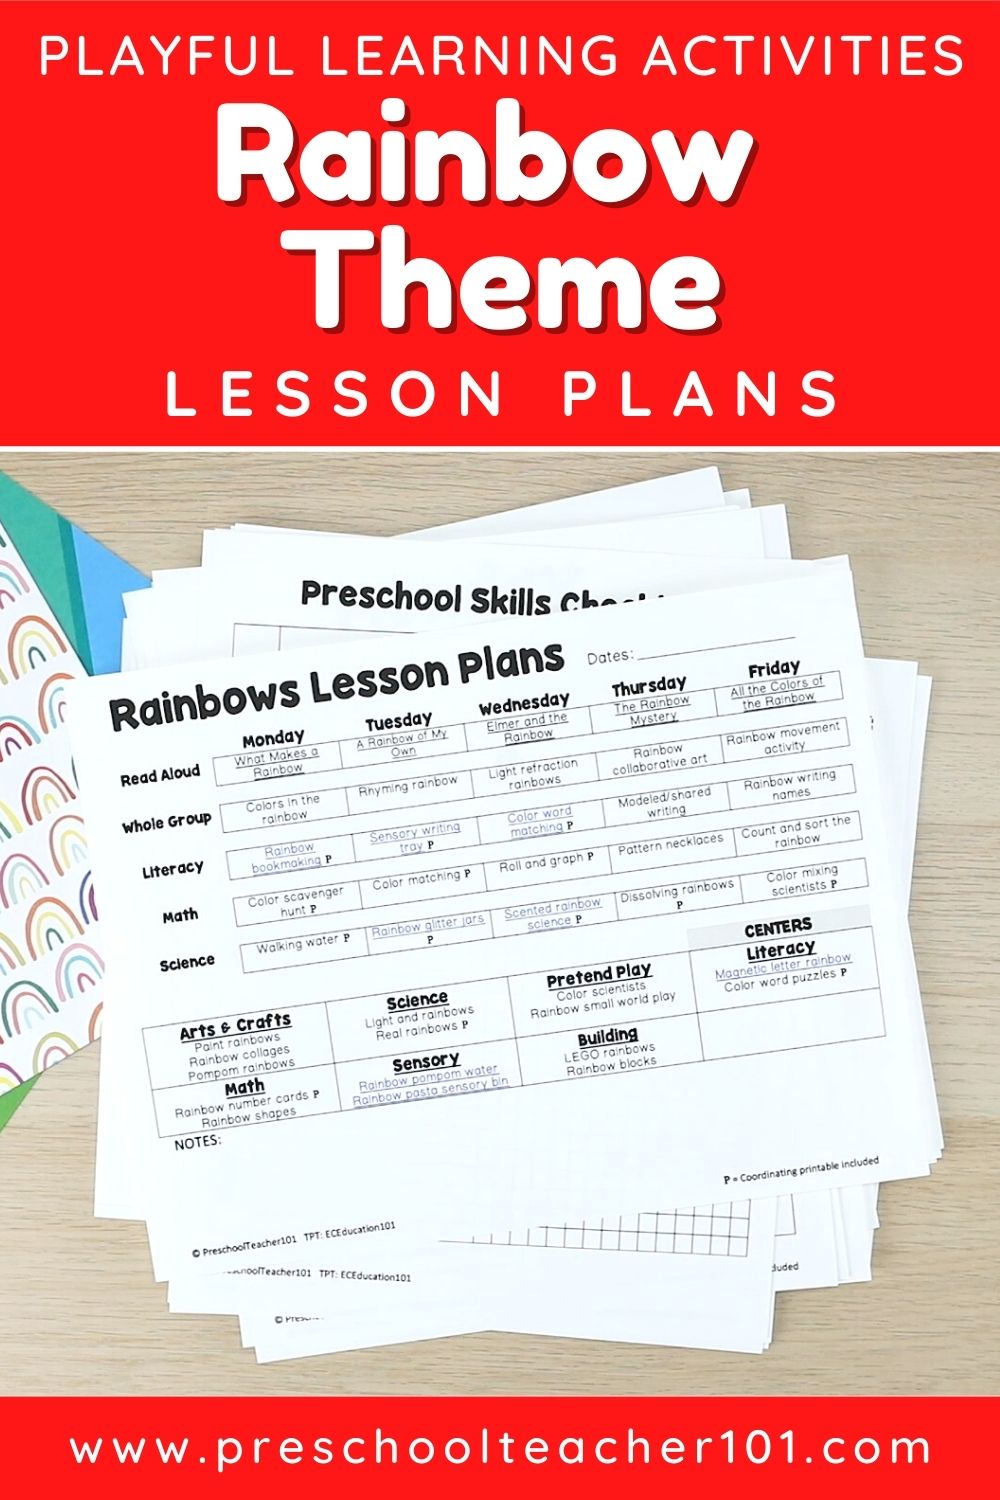 Lesson Plans - Rainbow